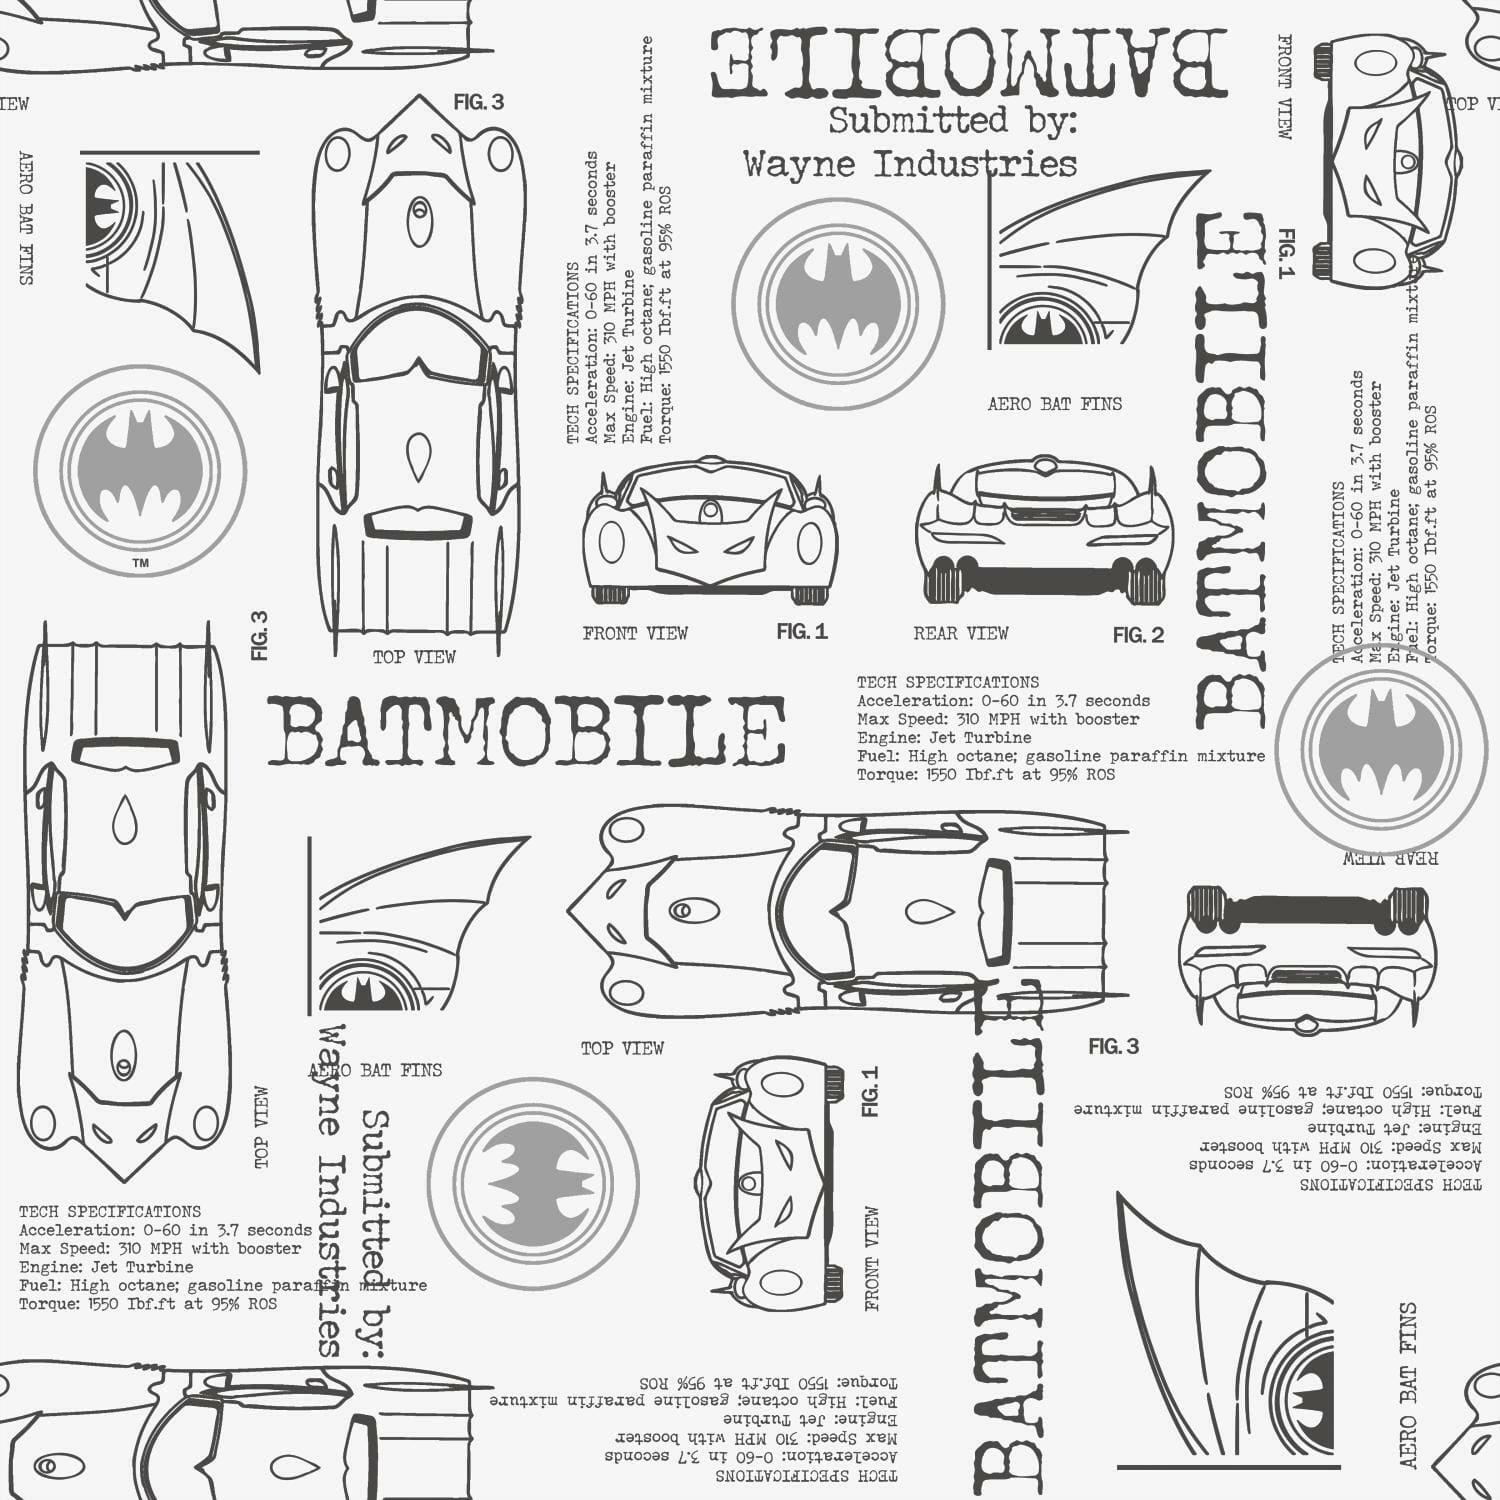 RoomMates Batmobile Blueprint Peel &#x26; Stick Wallpaper